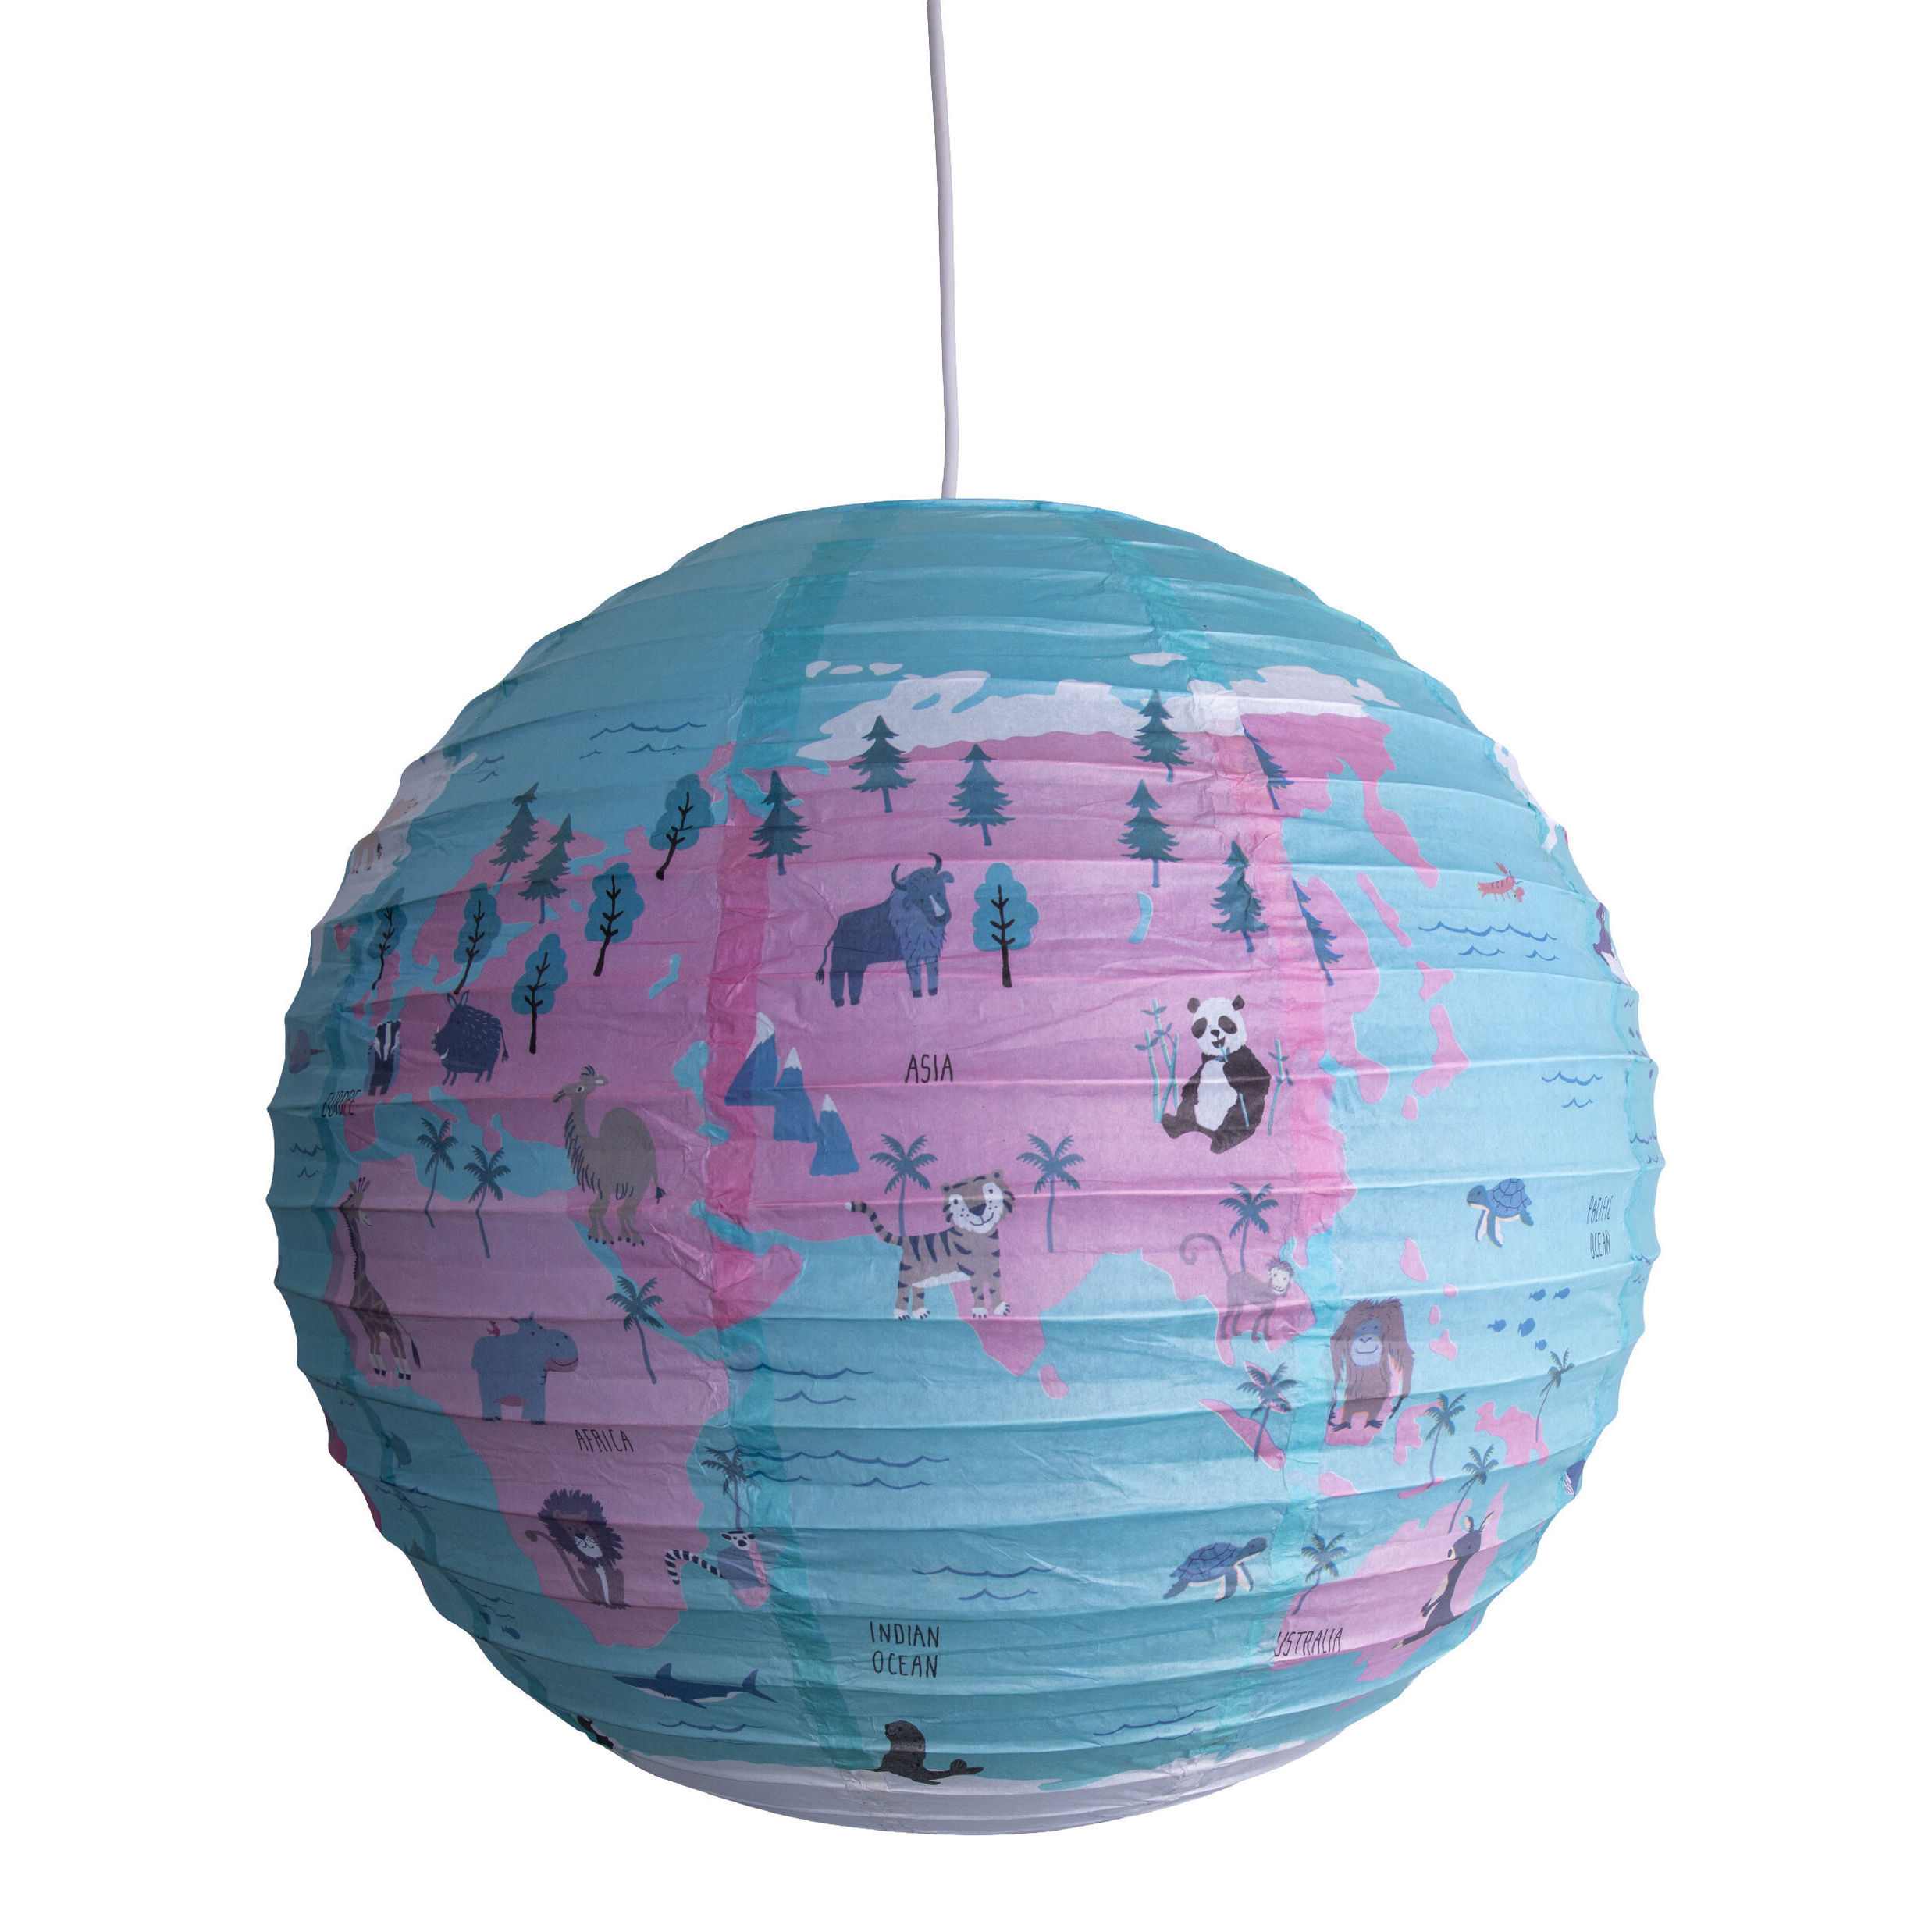 Näve Leuchten Papierleuchte Ballon“ d: 50cm Weltkugel Farbe: bunt |  Weltbild.de